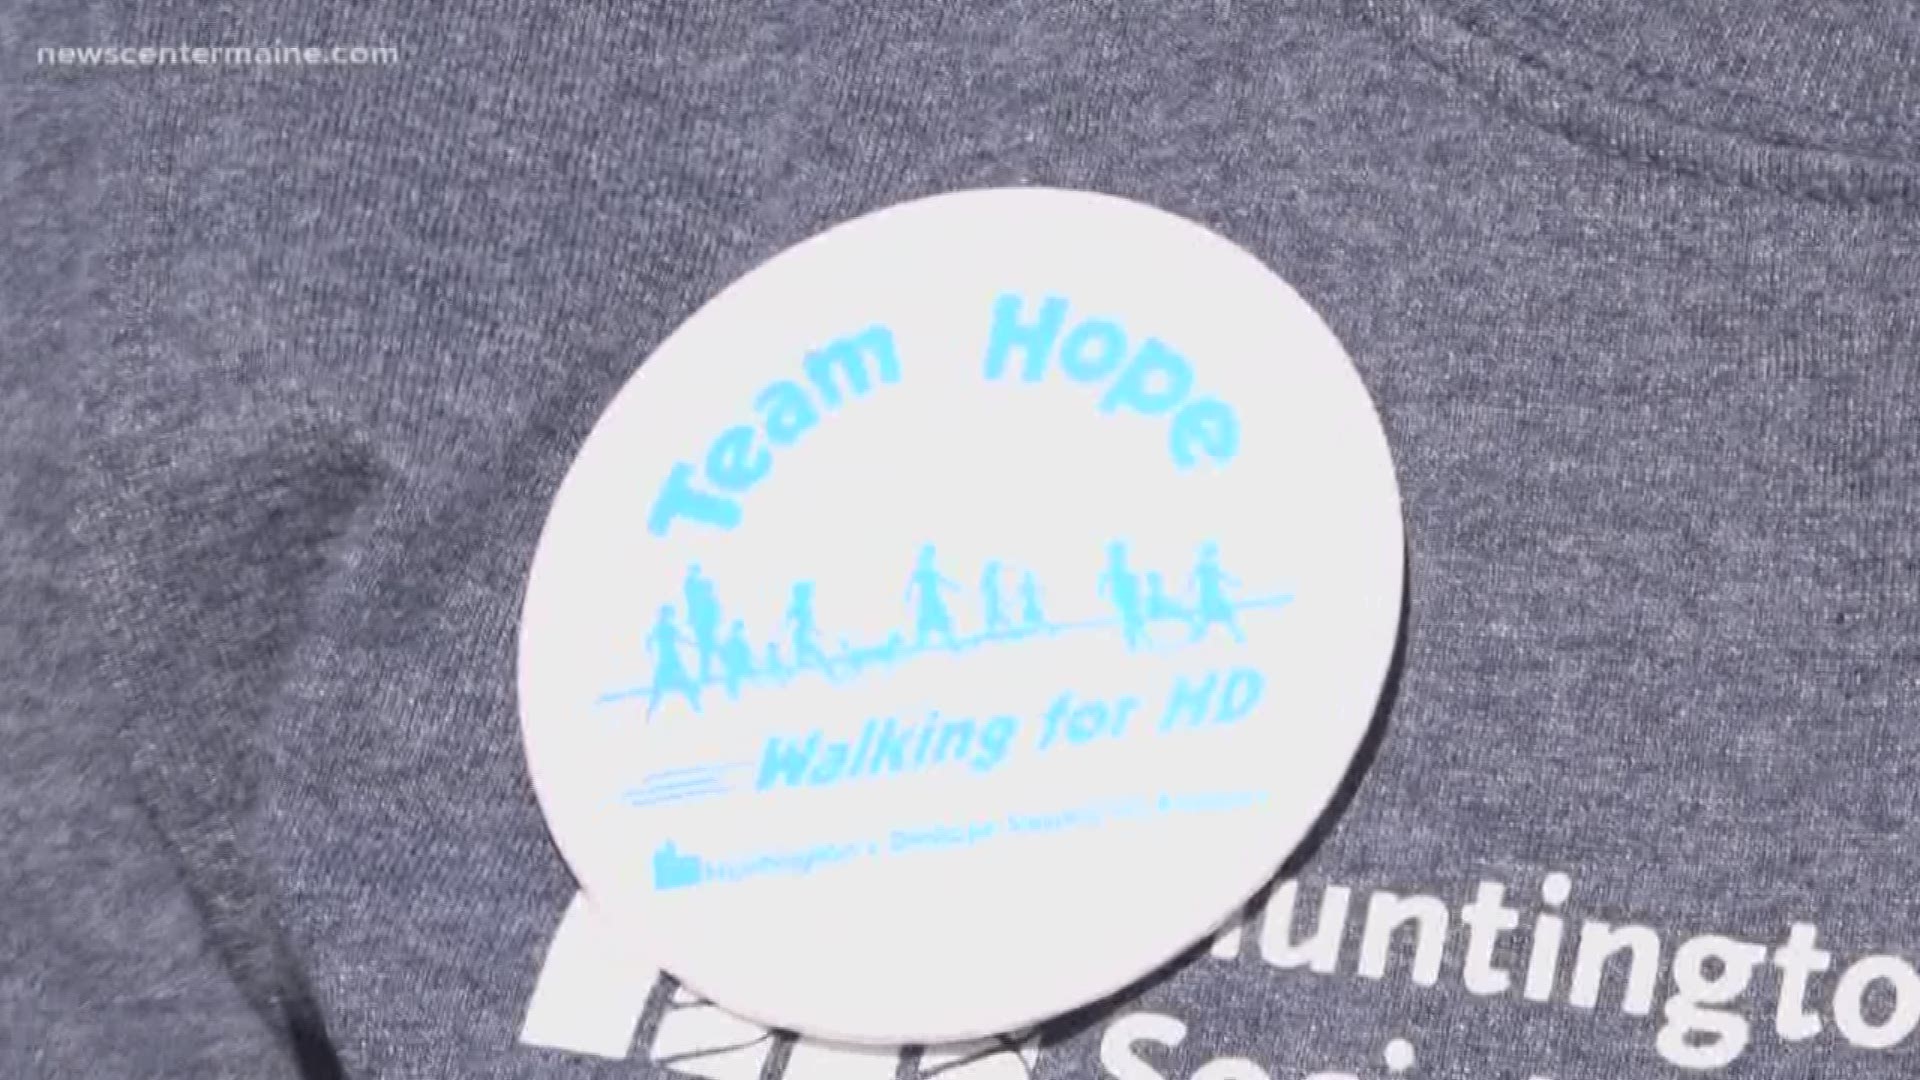 NEWS CENTER Maine's Samantha Sugarman walks with Team Hope in Ellsworth for their efforts against Huntington's disease.